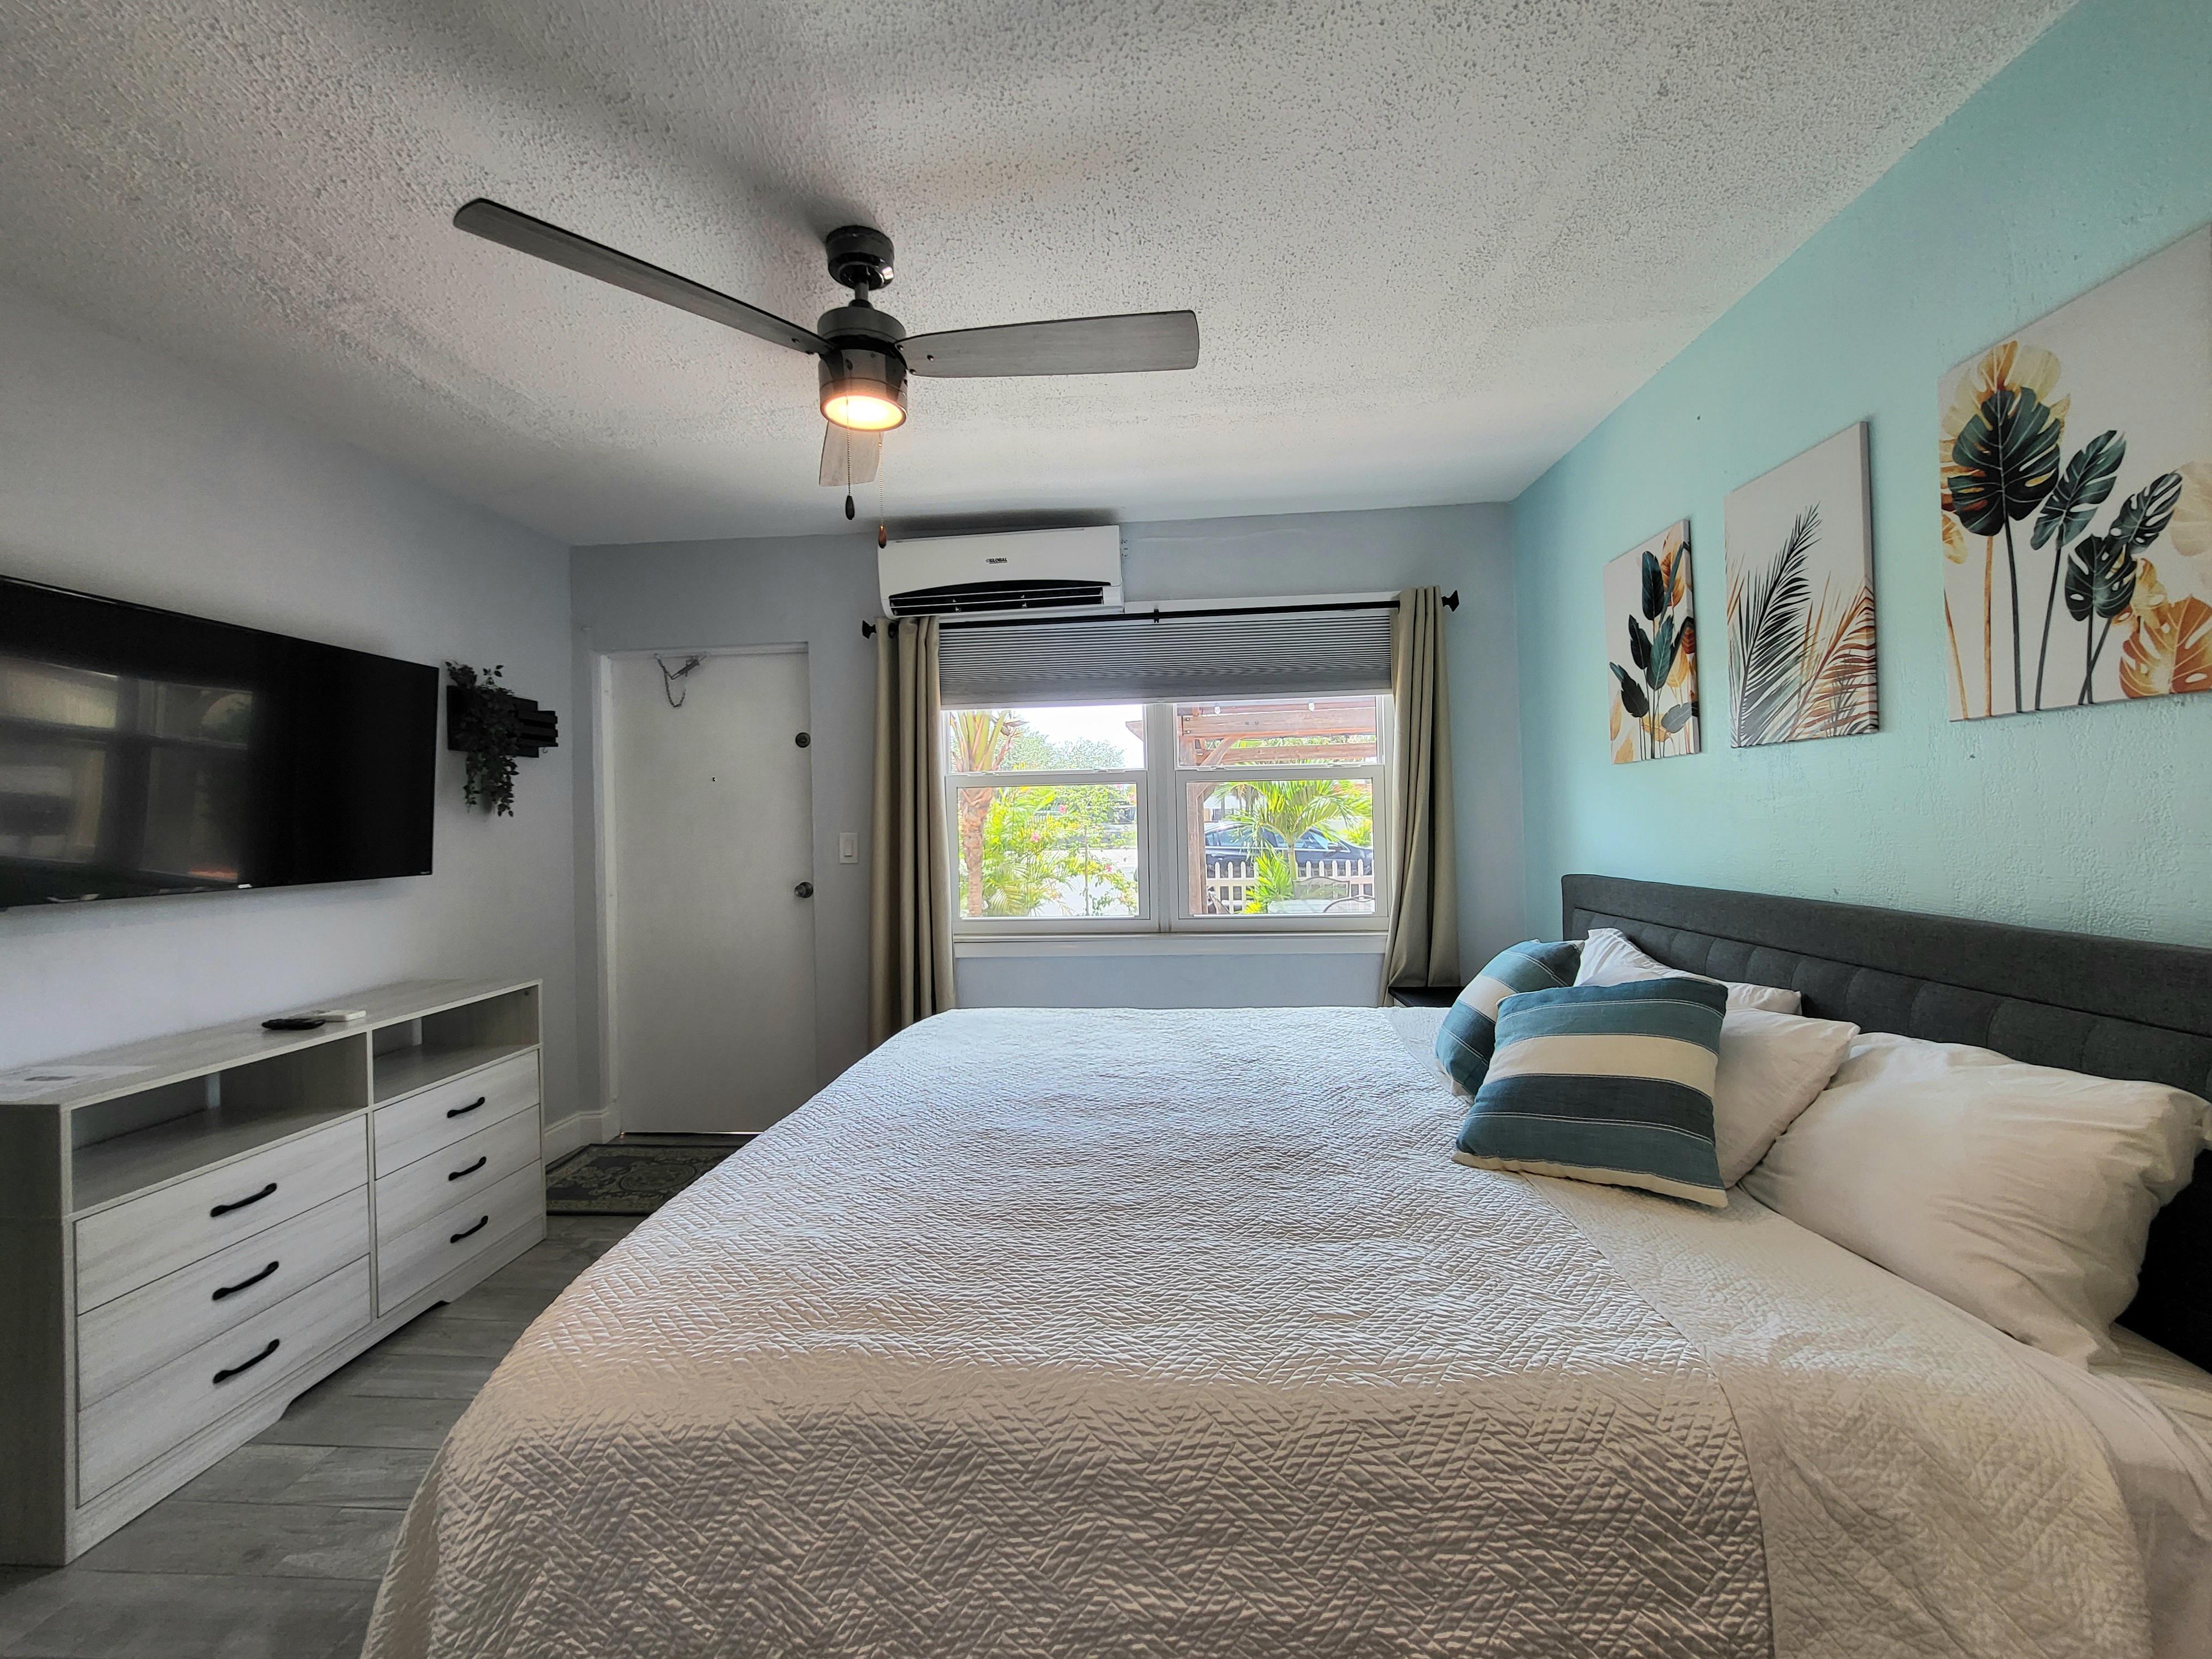 Barefoot Mailman Inn & Suites, Lantana, West Palm Beach, South Florida